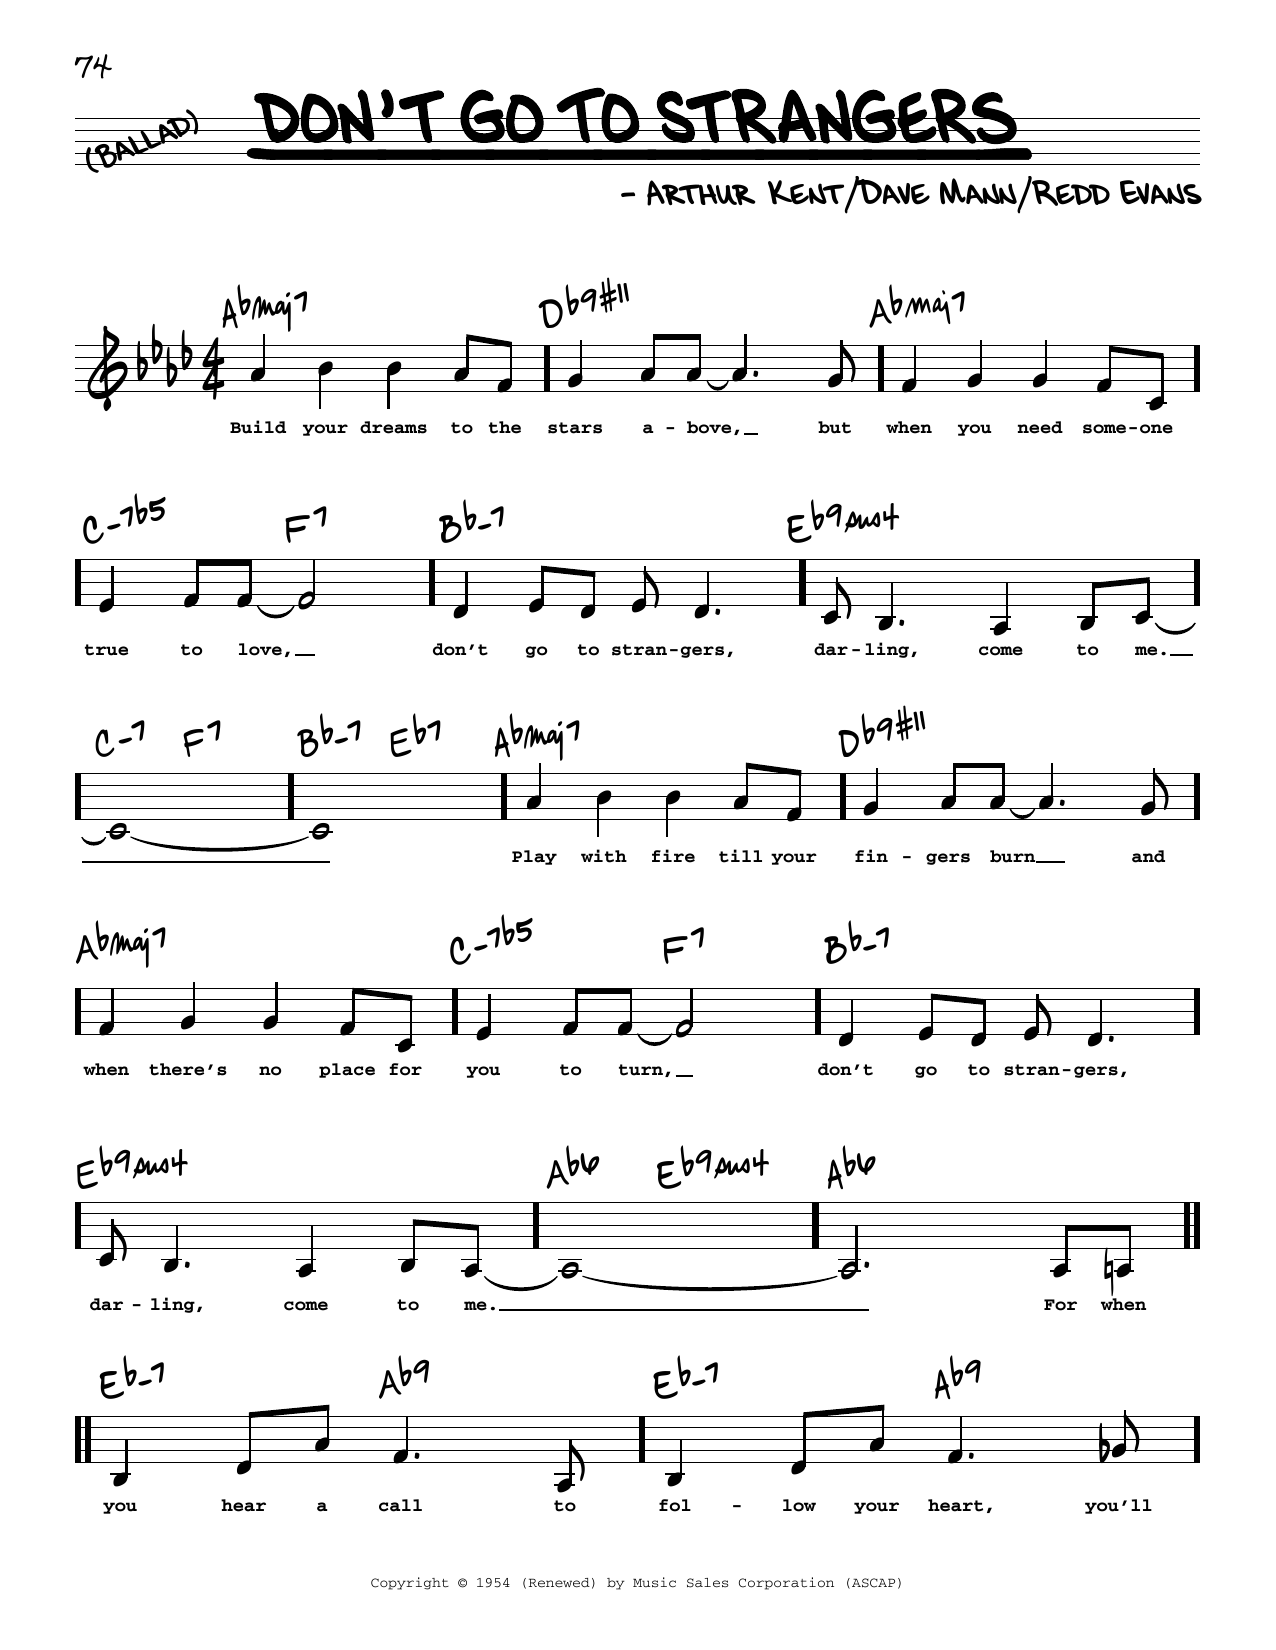 Redd Evans Don't Go To Strangers (Low Voice) sheet music notes printable PDF score